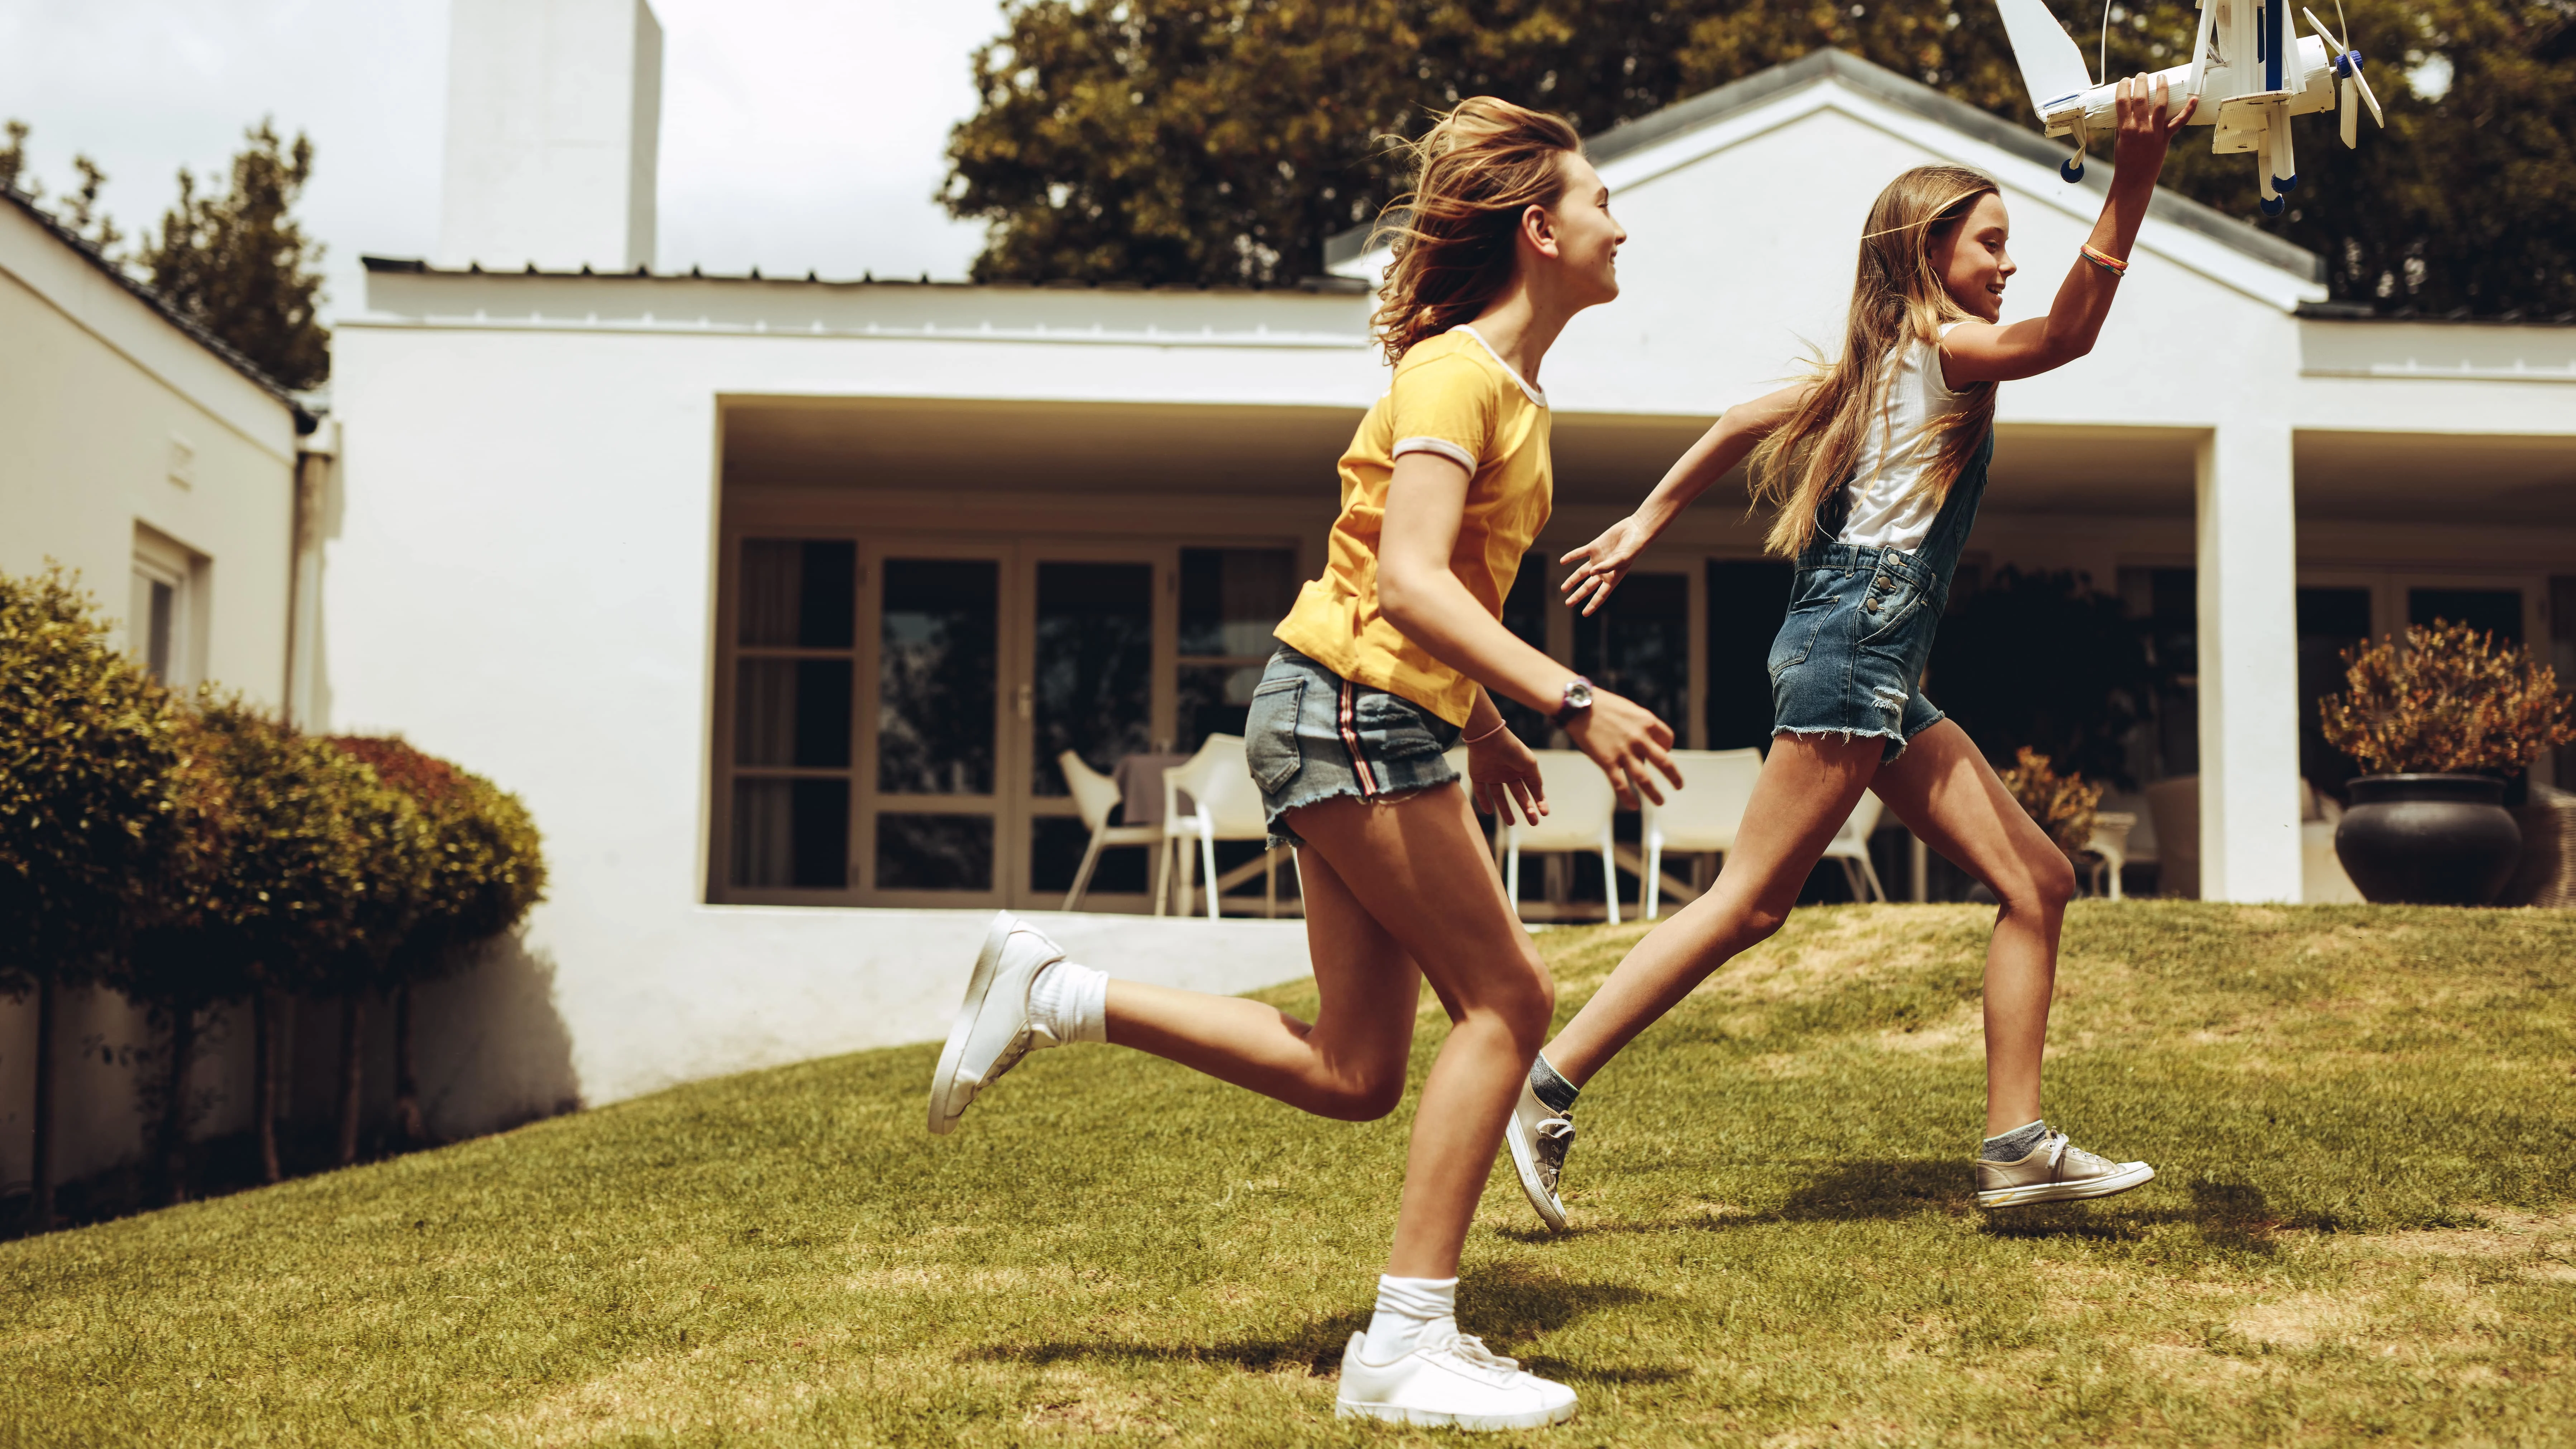 Two teenage girls playing in a yard